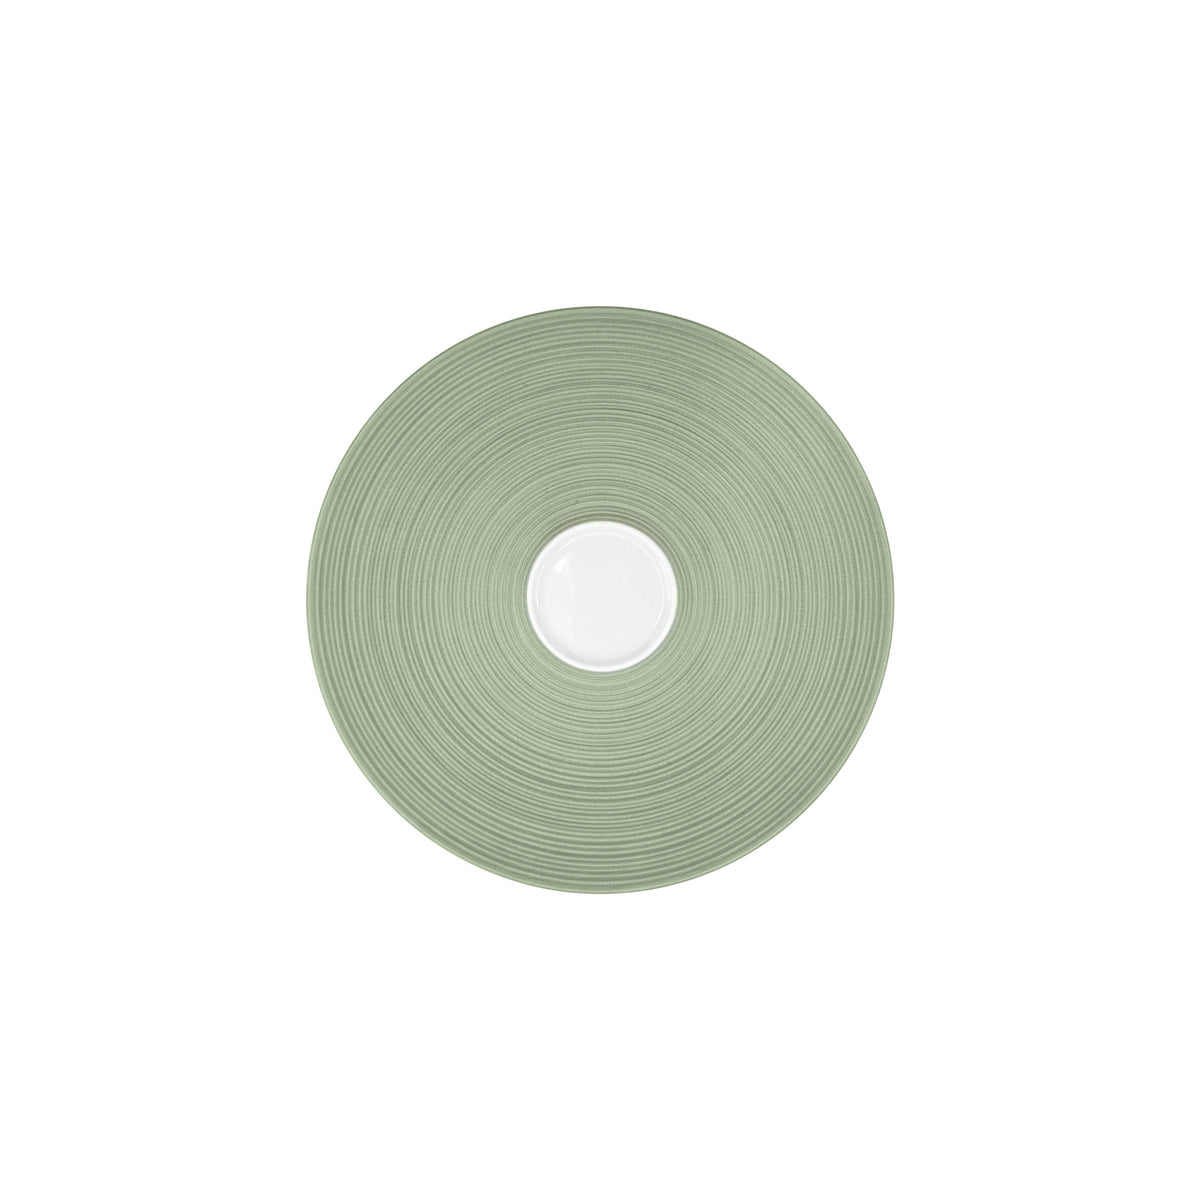 HEMISPHERE Kaki-Green Tea set (cup & saucer) (Copy)